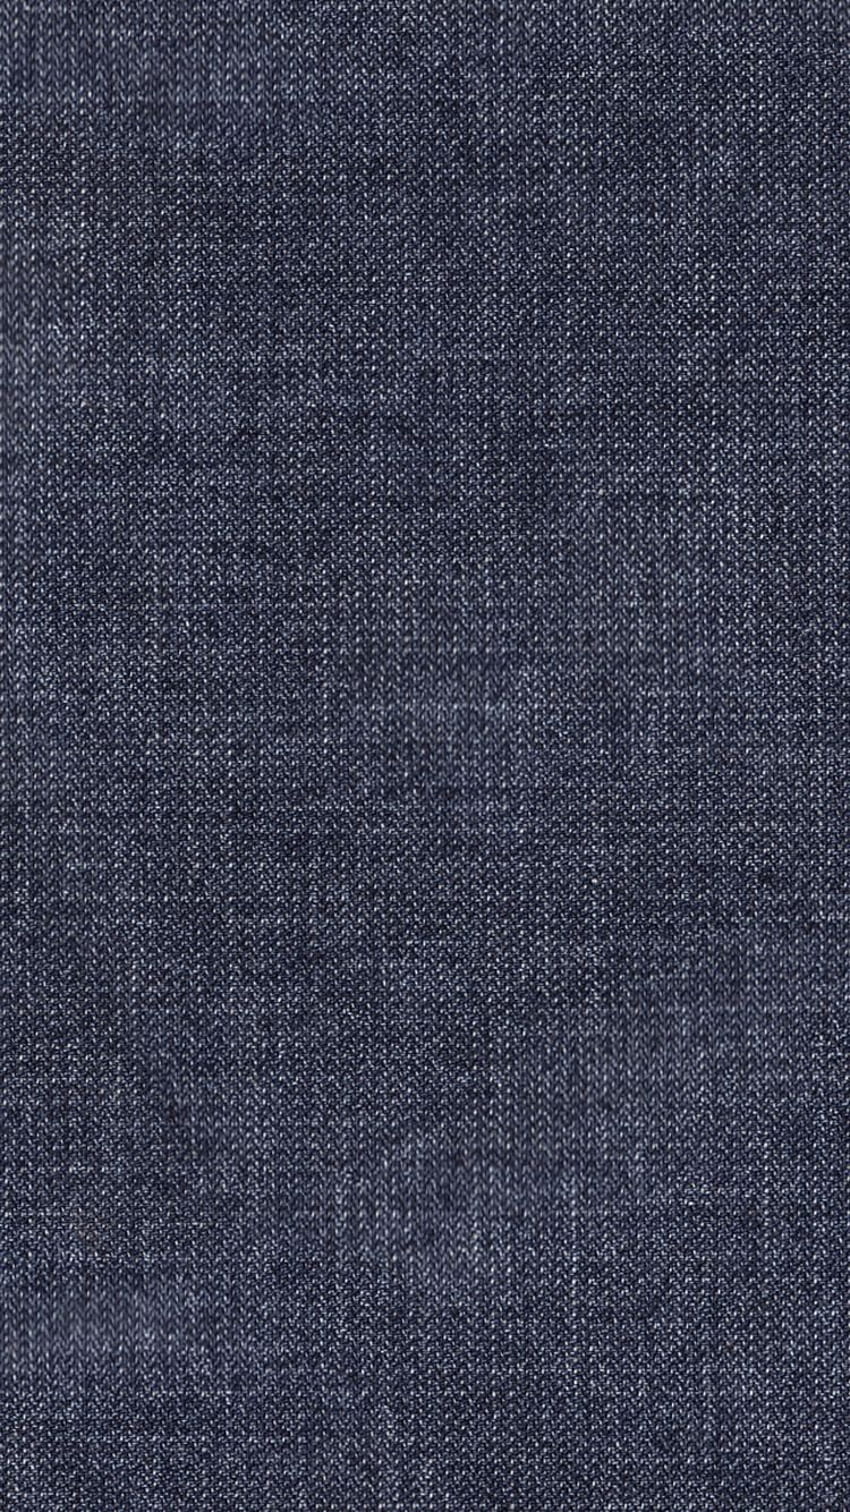 Denim Jeans Texture iPhone 6 . iPhone 6 , Fabric texture seamless, Denim texture HD phone wallpaper